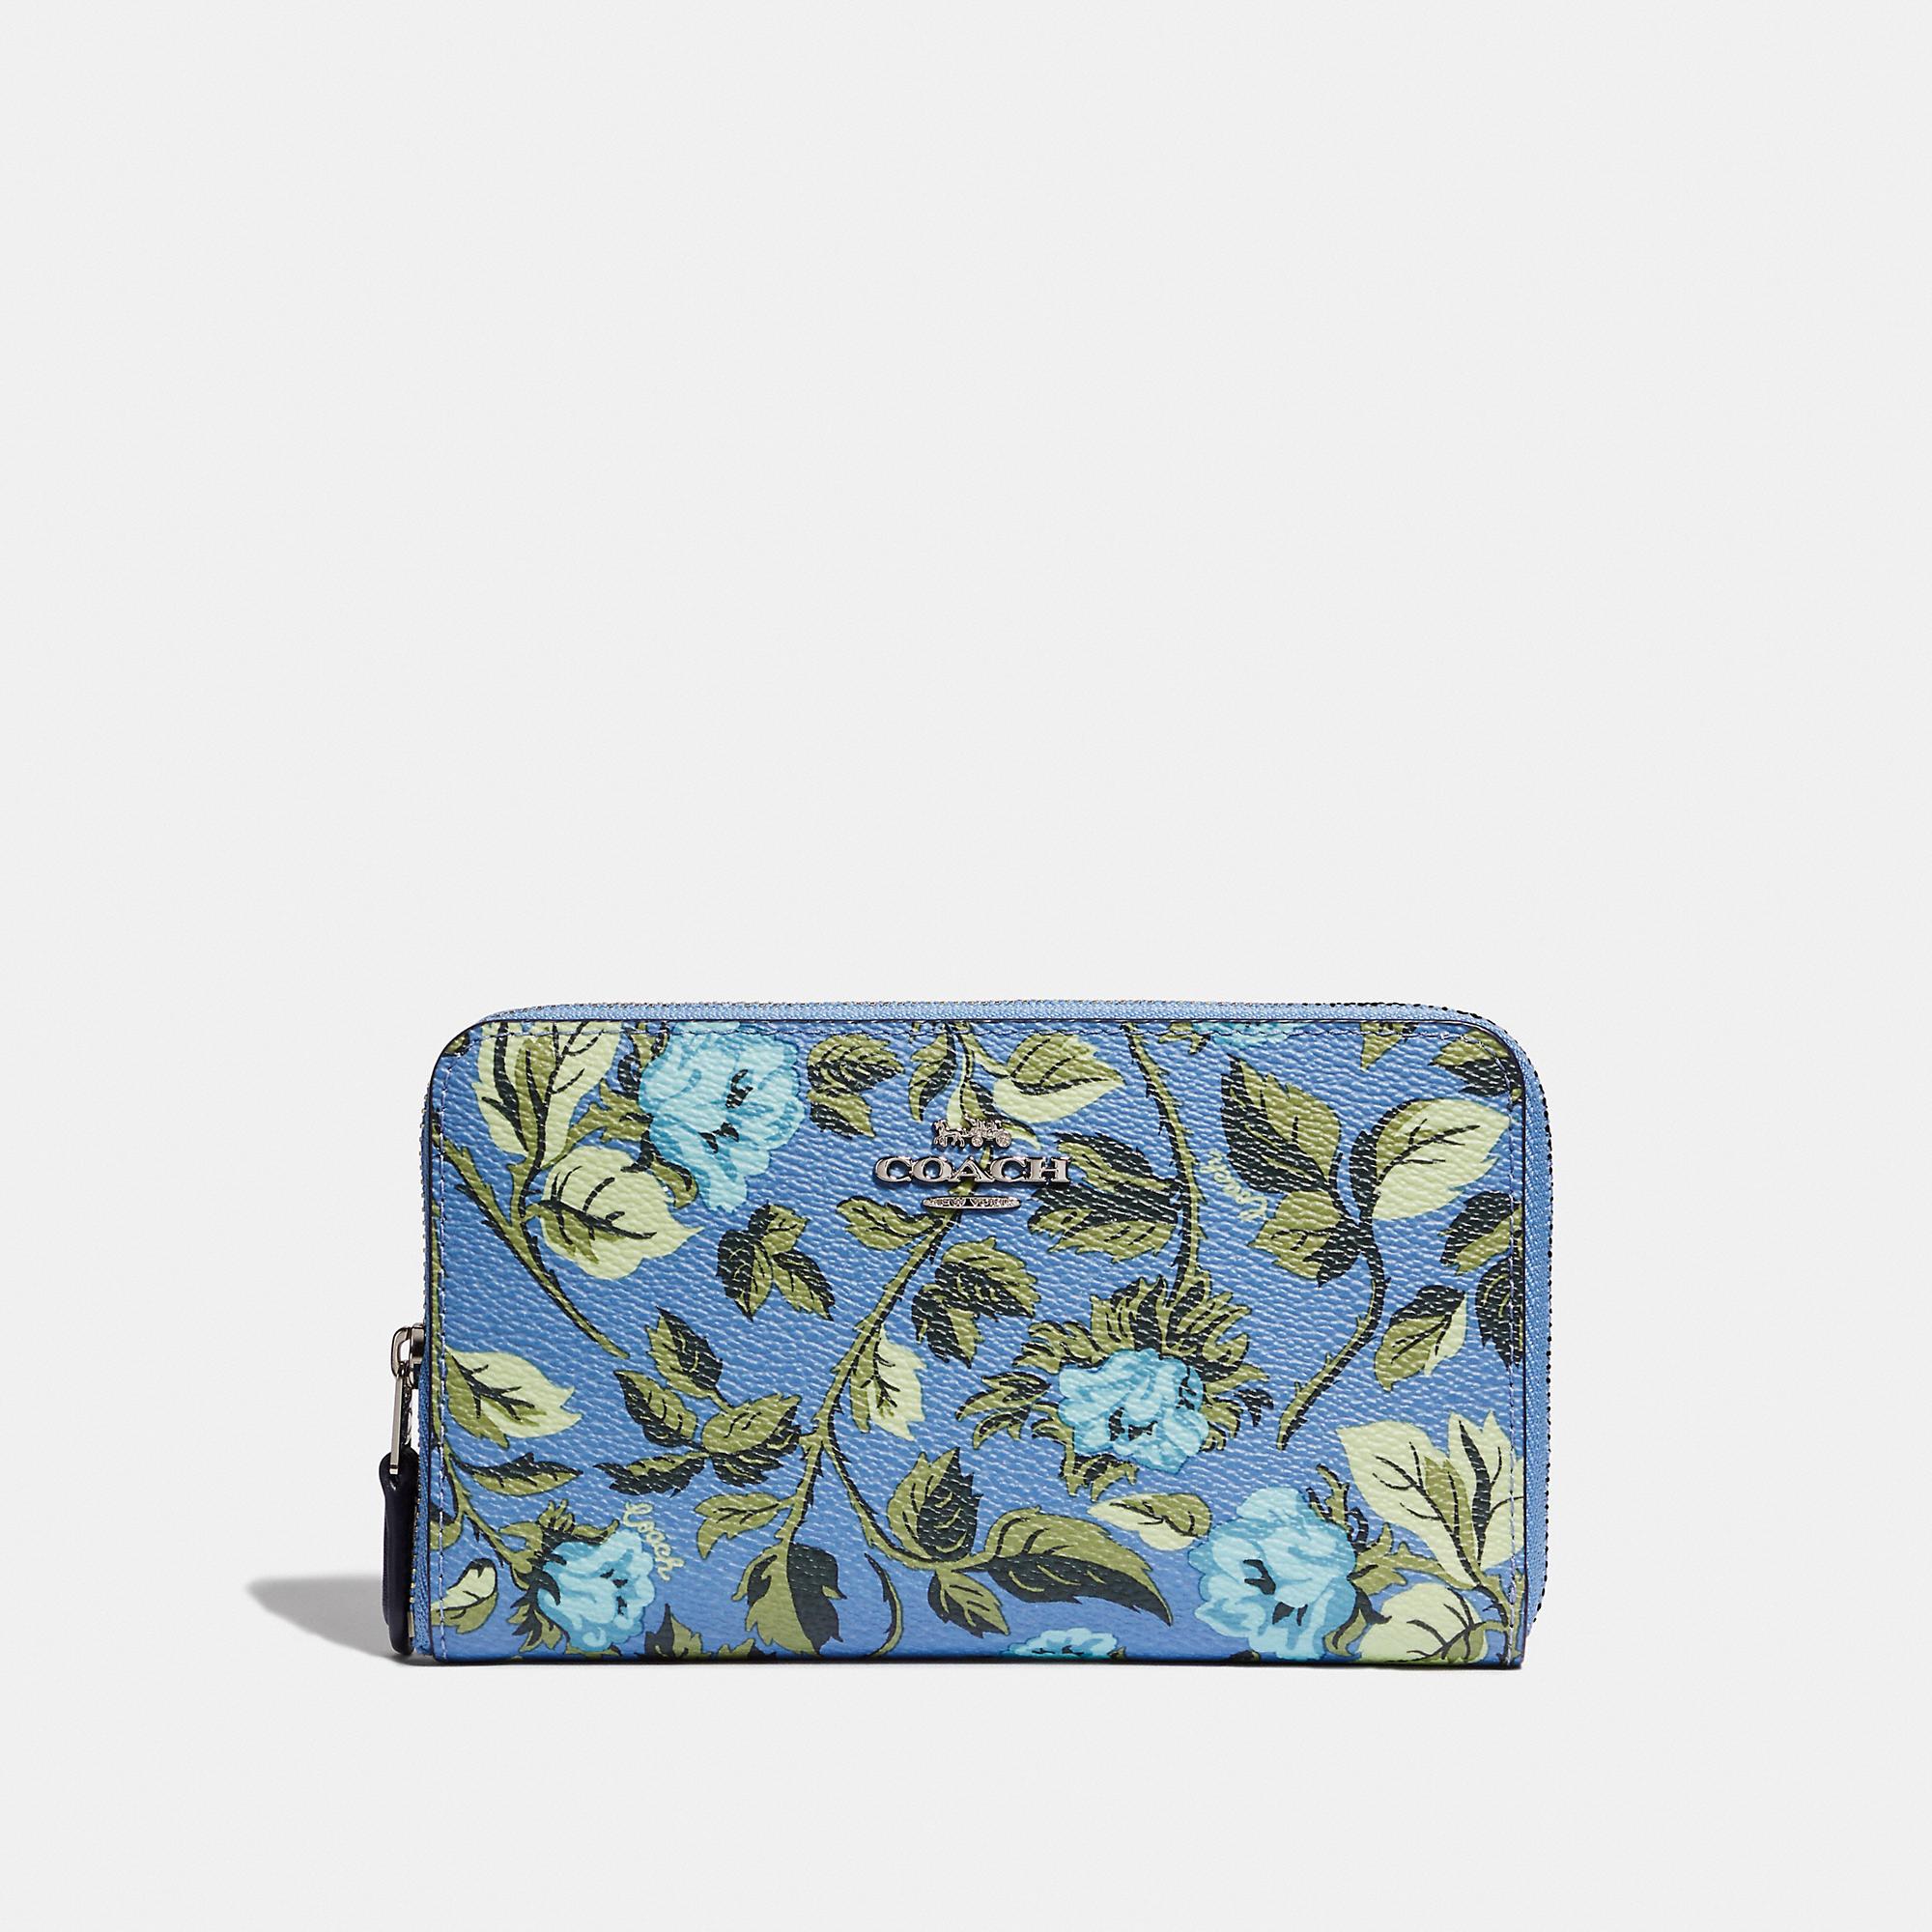 Lyst - COACH Medium Zip Around Wallet With Sleeping Rose Print in Blue